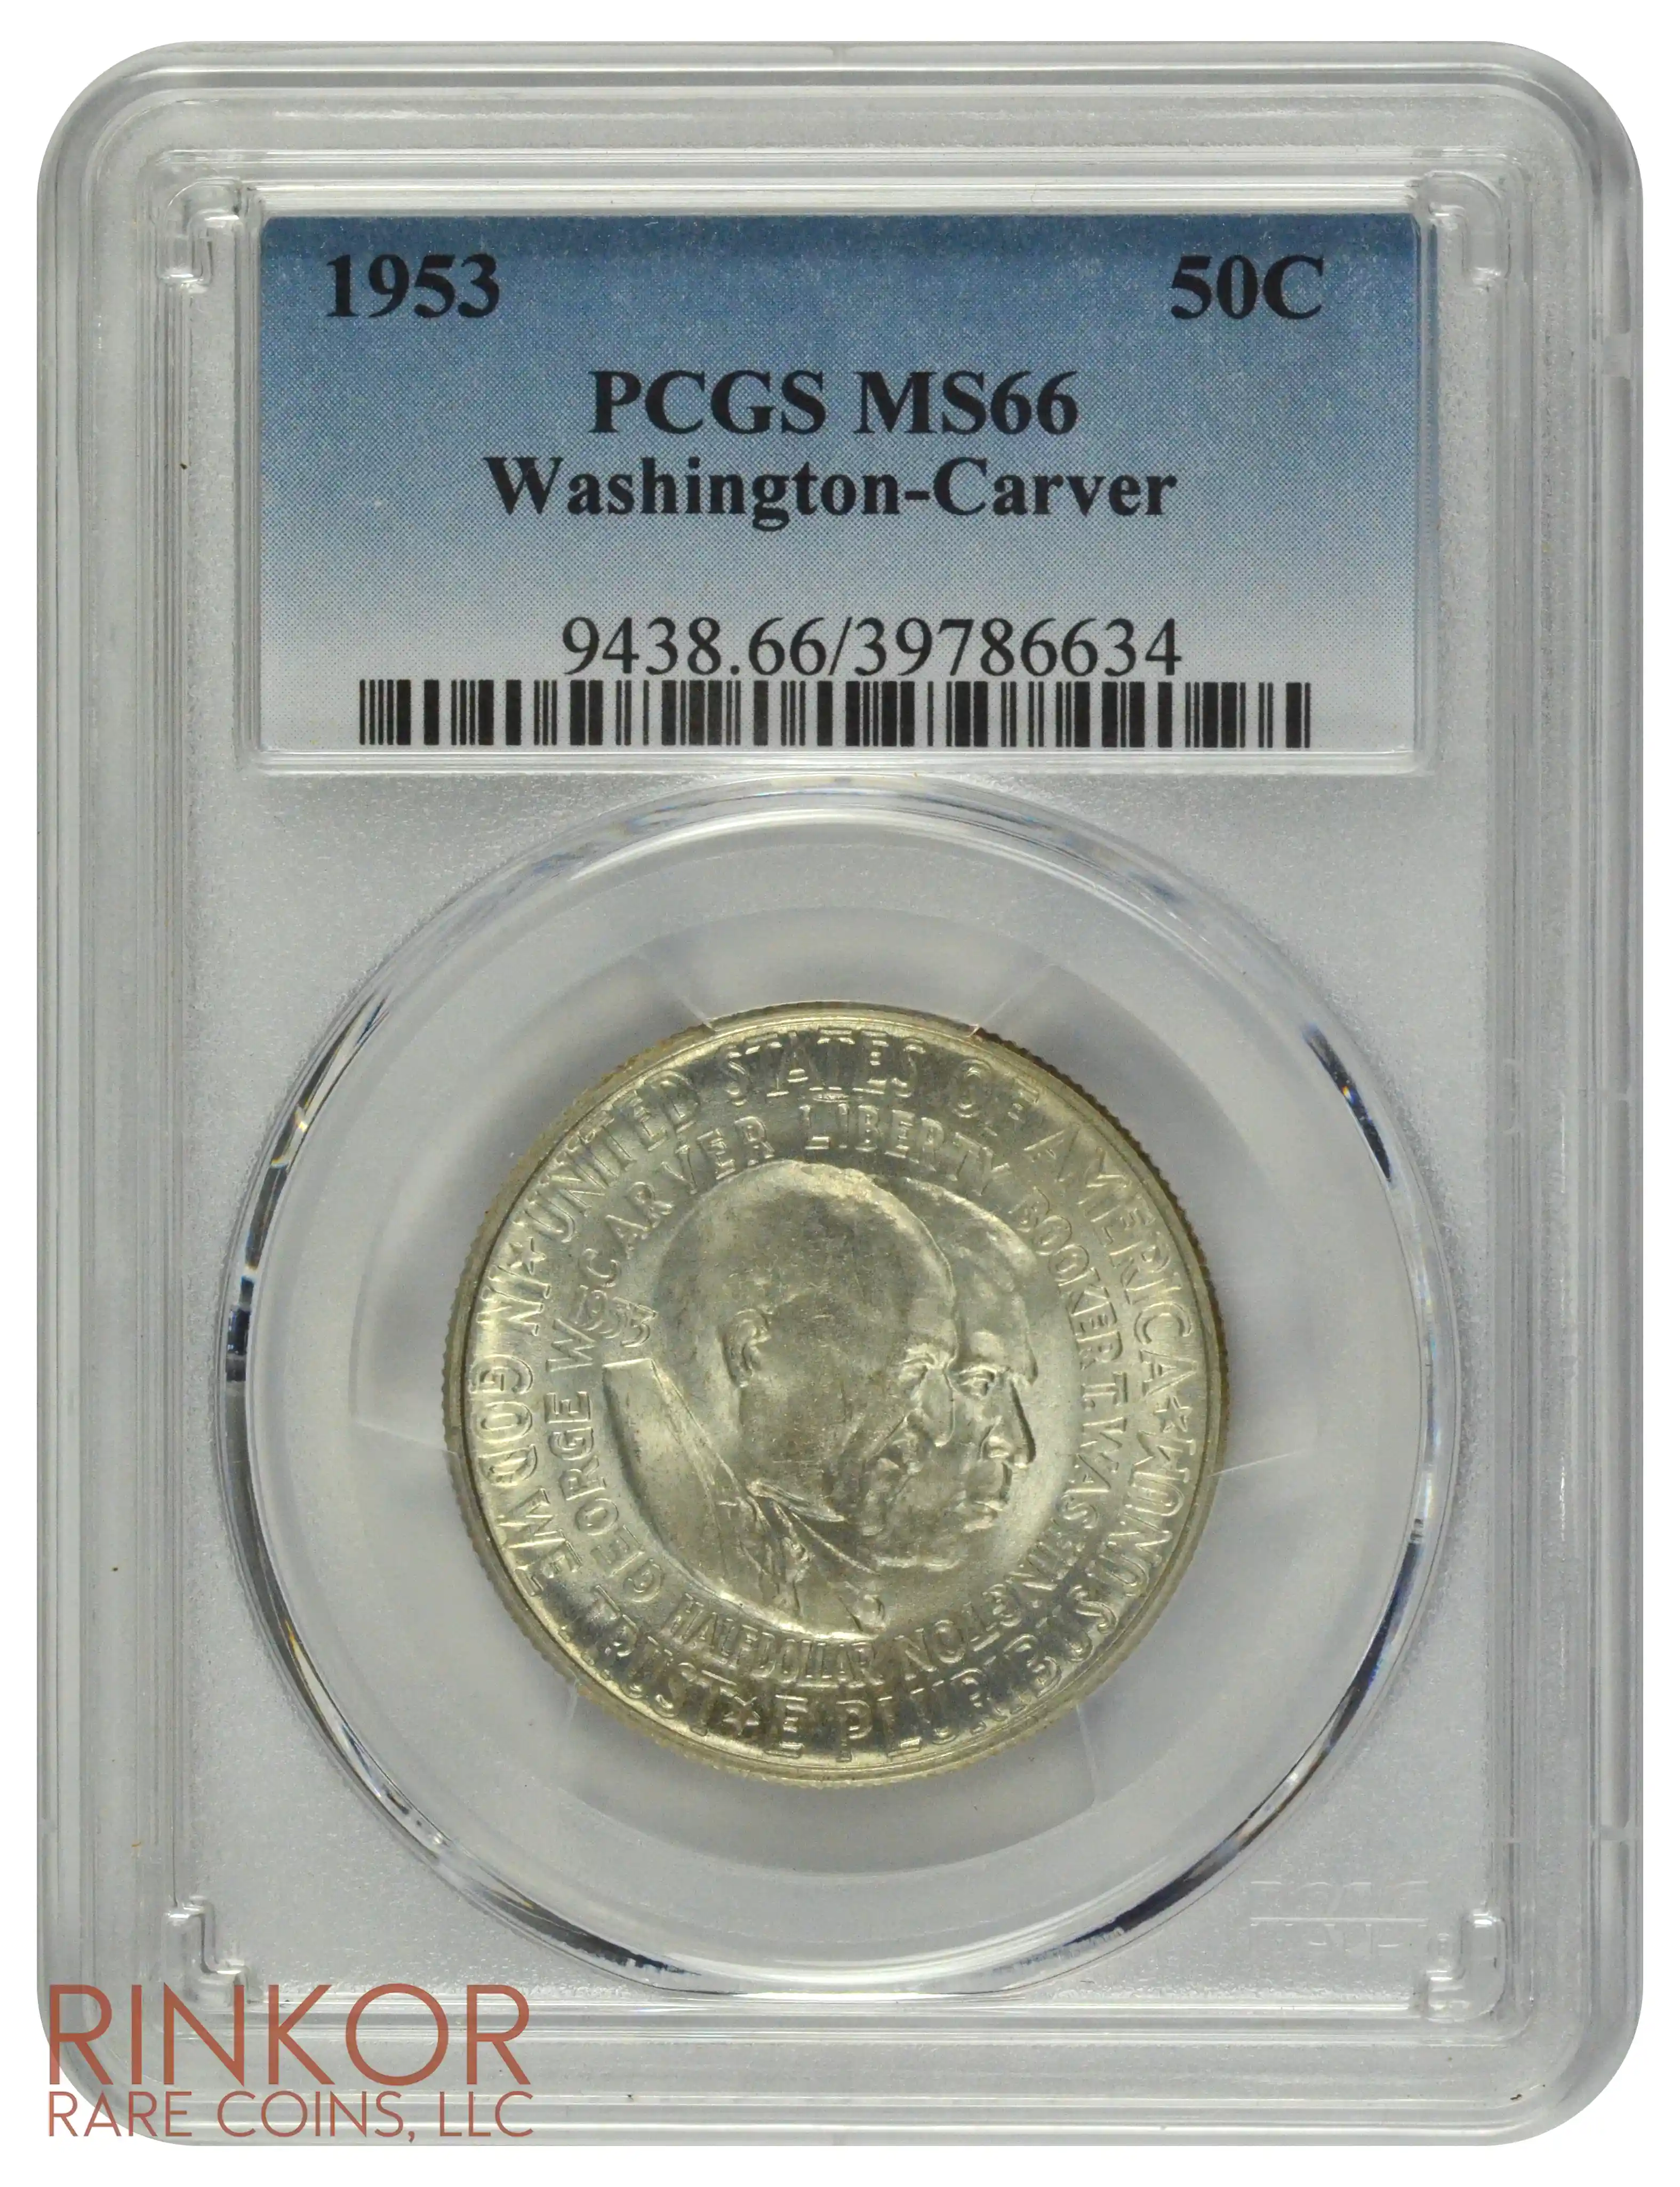 1953 Washington-Carver Commemorative Half Dollar PCGS MS 66